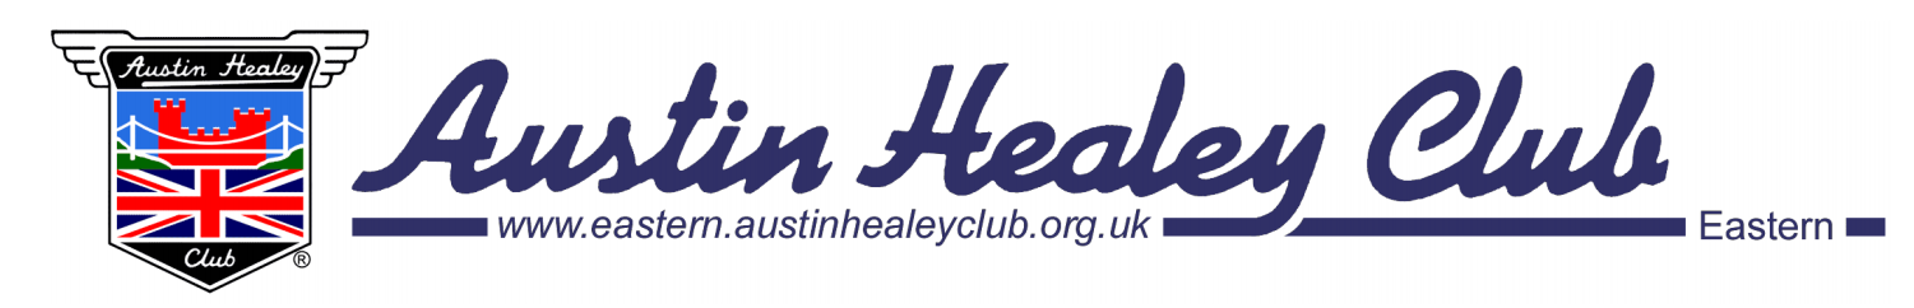 Austin Healey Club Eastern